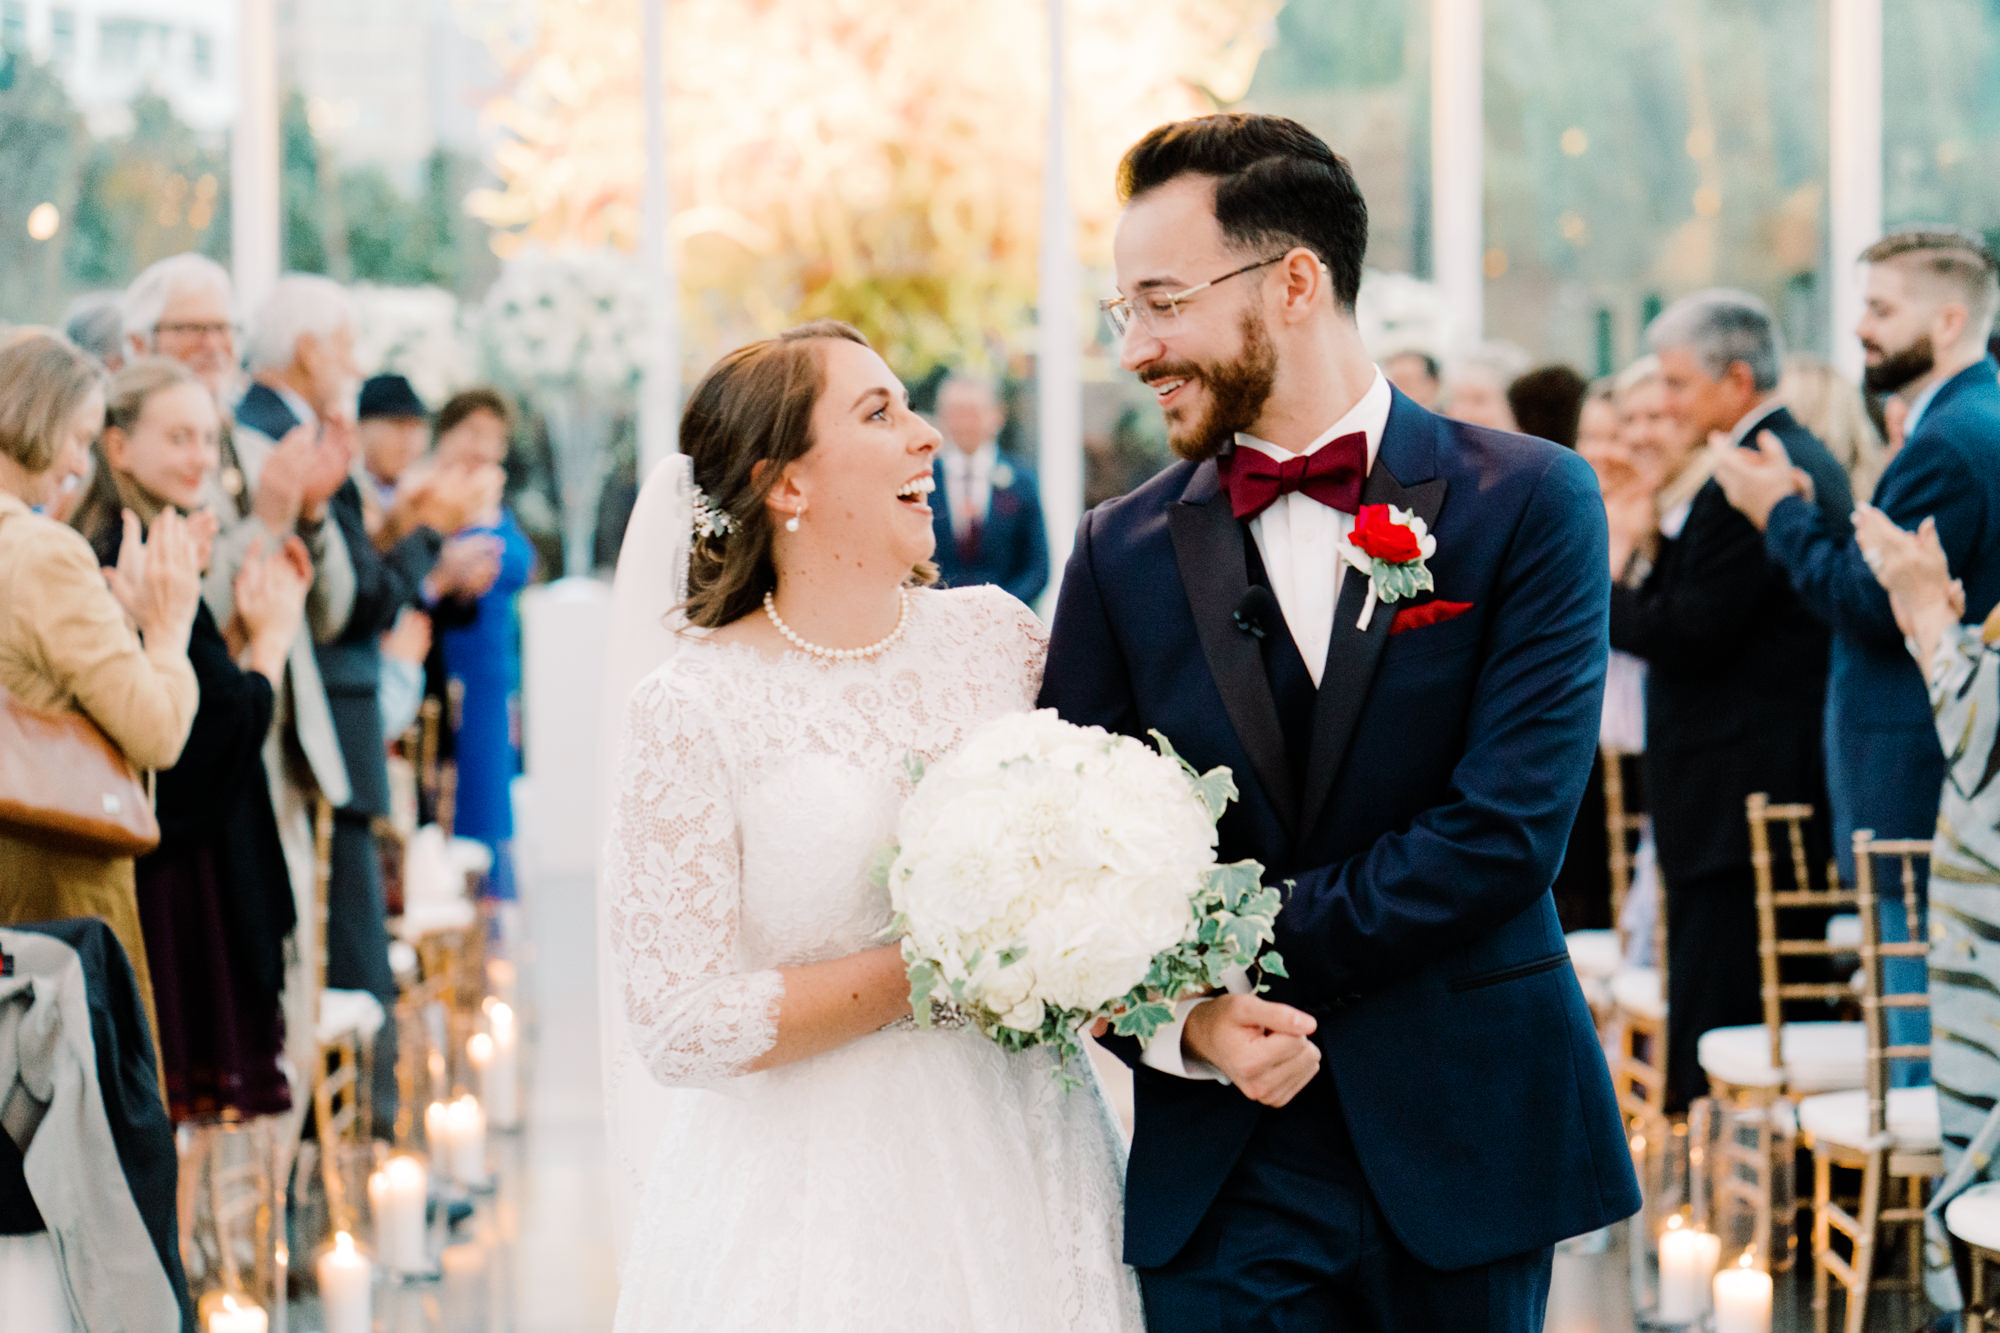 Congratulations Lauren and Kyle on your wedding!